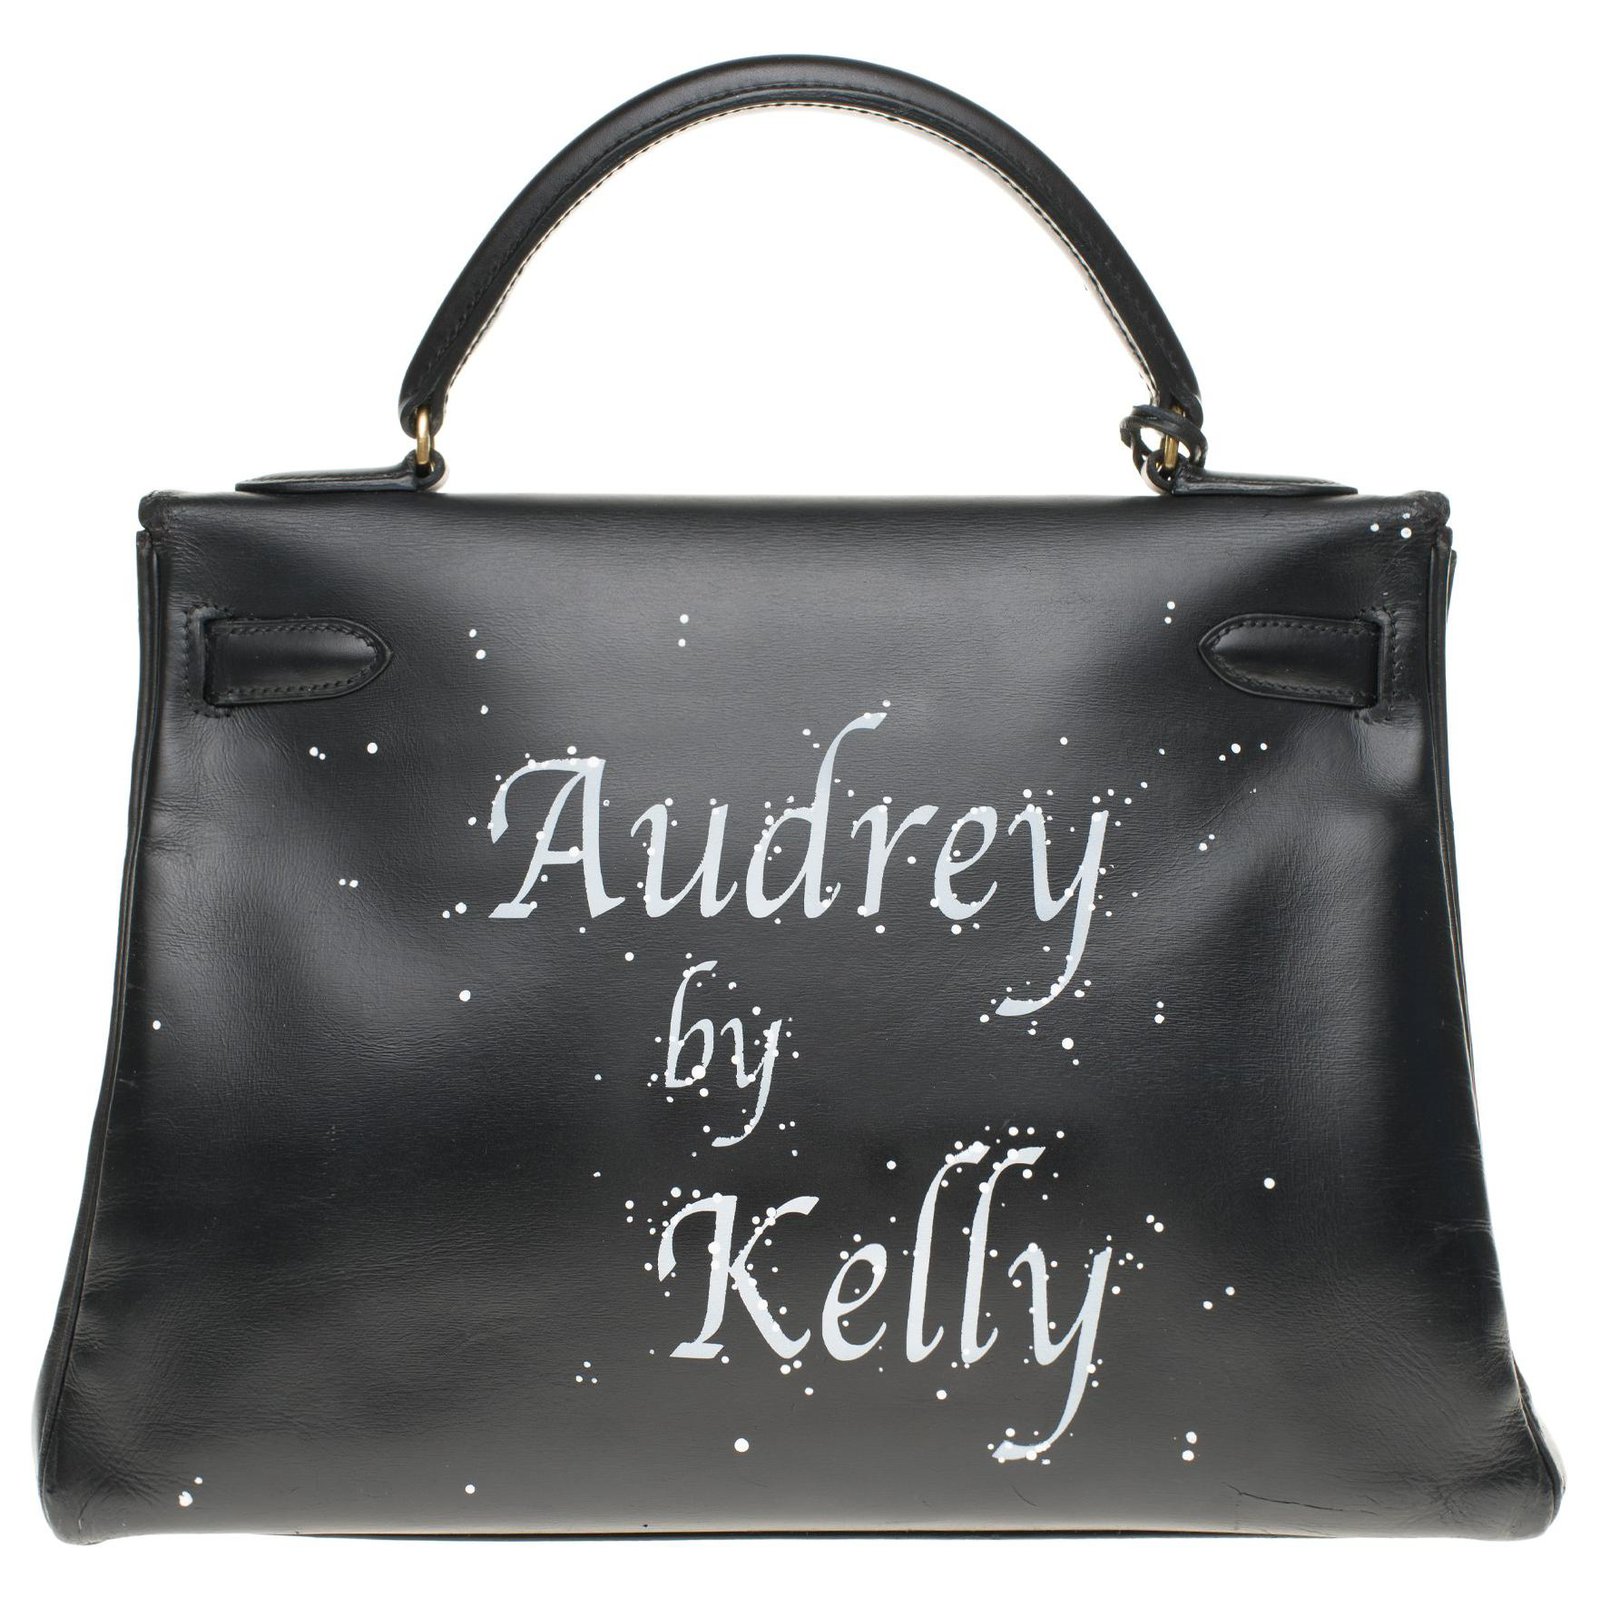 Amazing creation Audrey Hepburn on Kelly 32 cm handbag in black calfskin